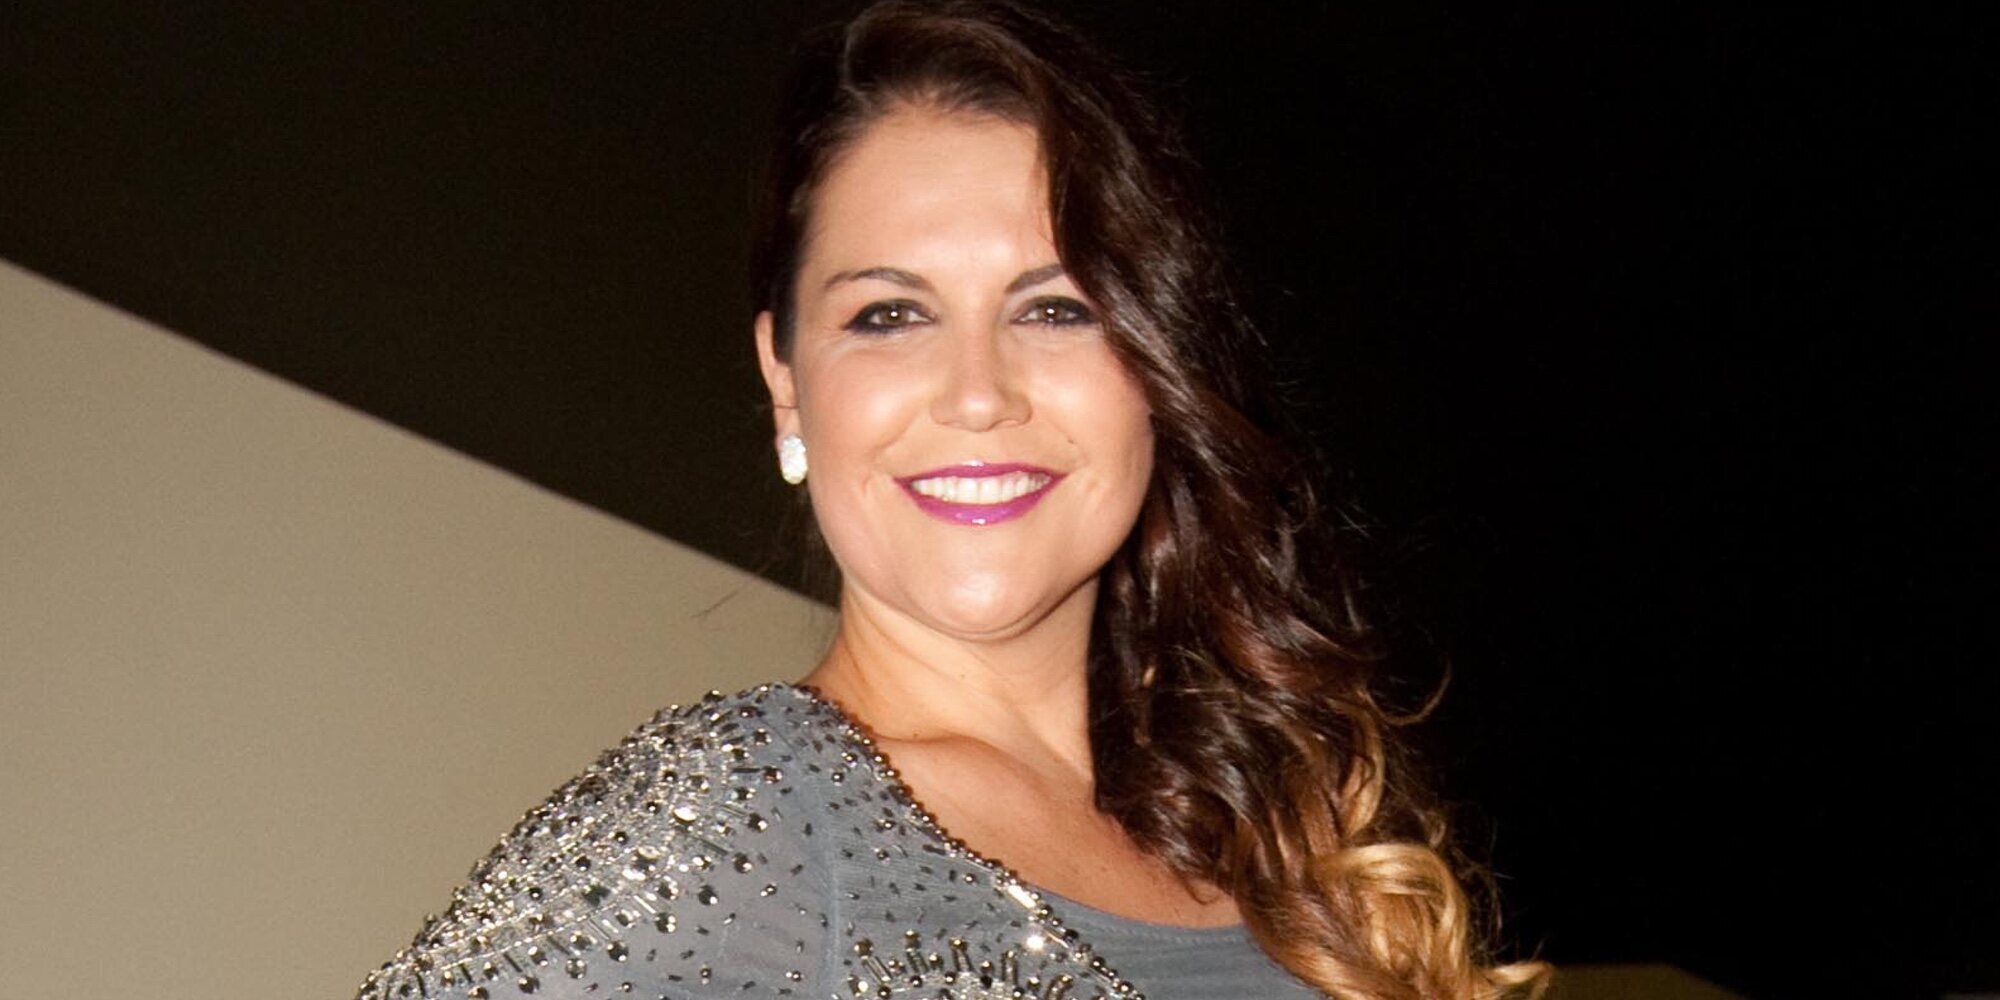 Katia Aveiro, la hermana de Cristiano Ronaldo, ingresada por coronavirus tras ser negacionista